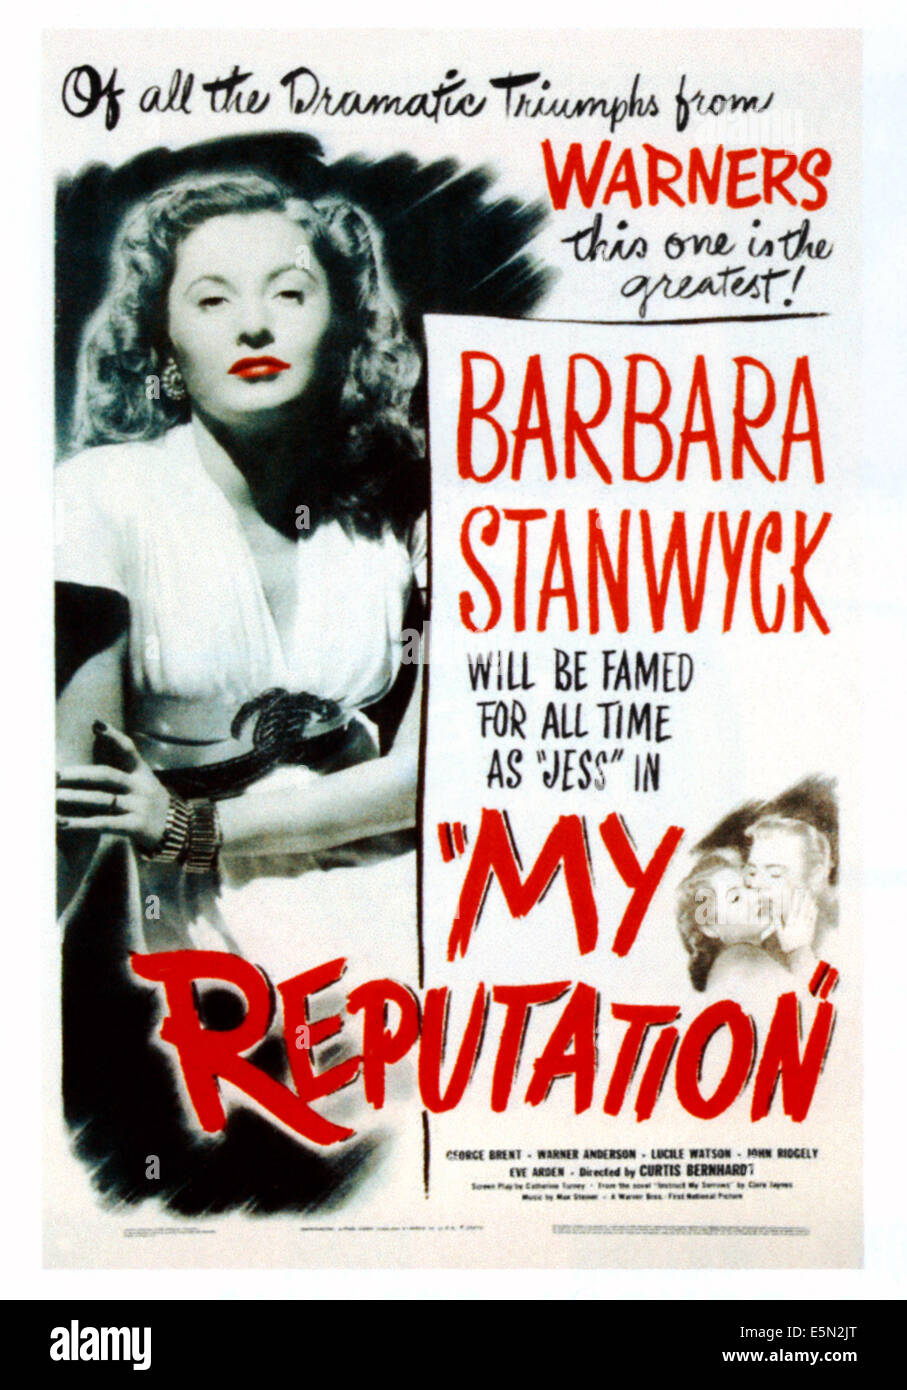 MY REPUTATION, left: Barbara Stanwyck on poster art, 1946 Stock Photo